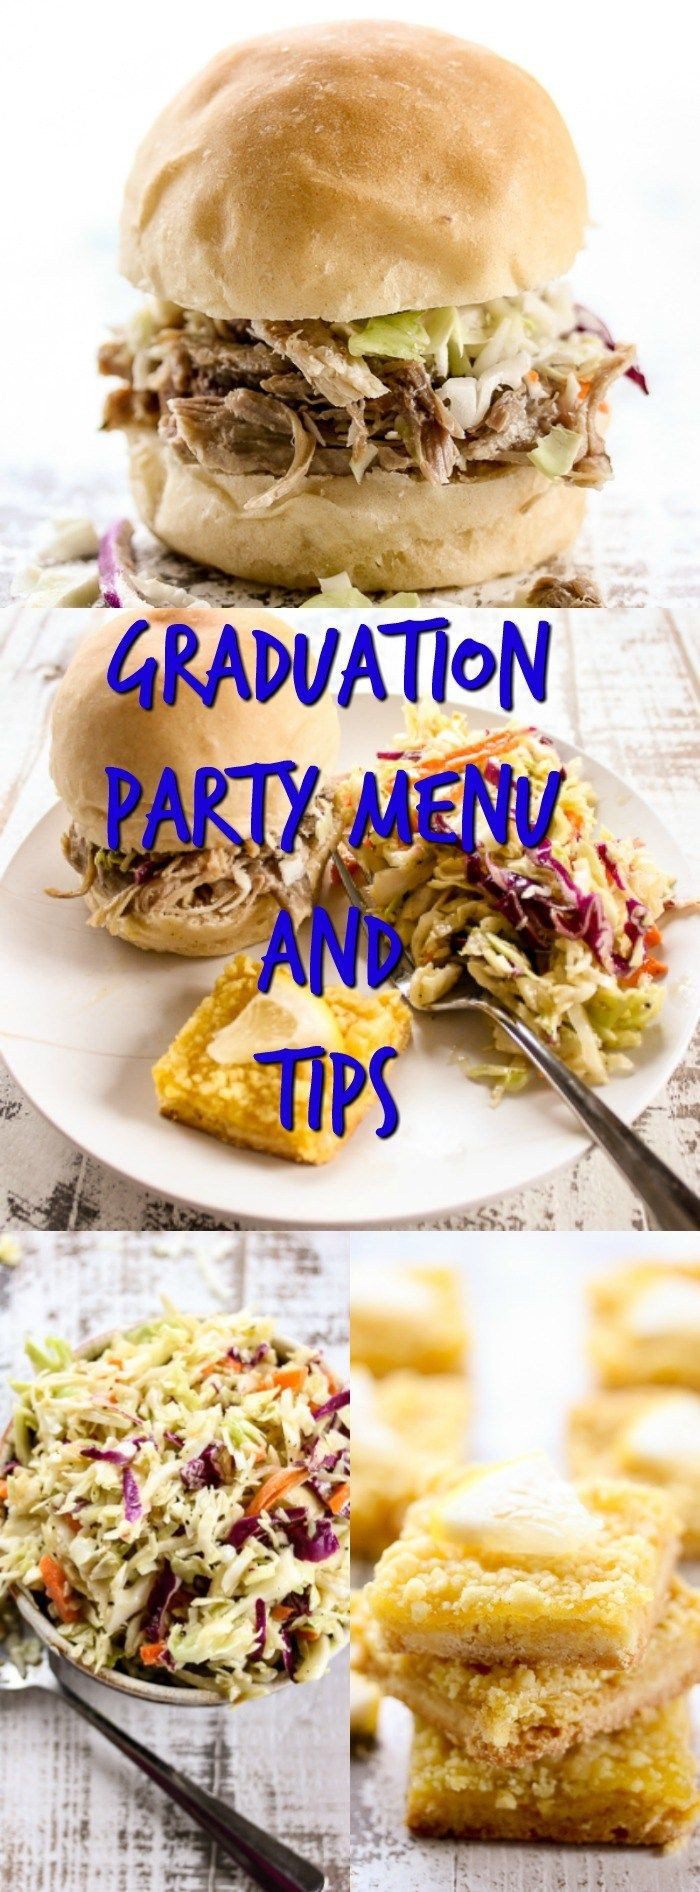 High School Graduation Party Menu Ideas Recipe
 Graduation Party Menu and Tips